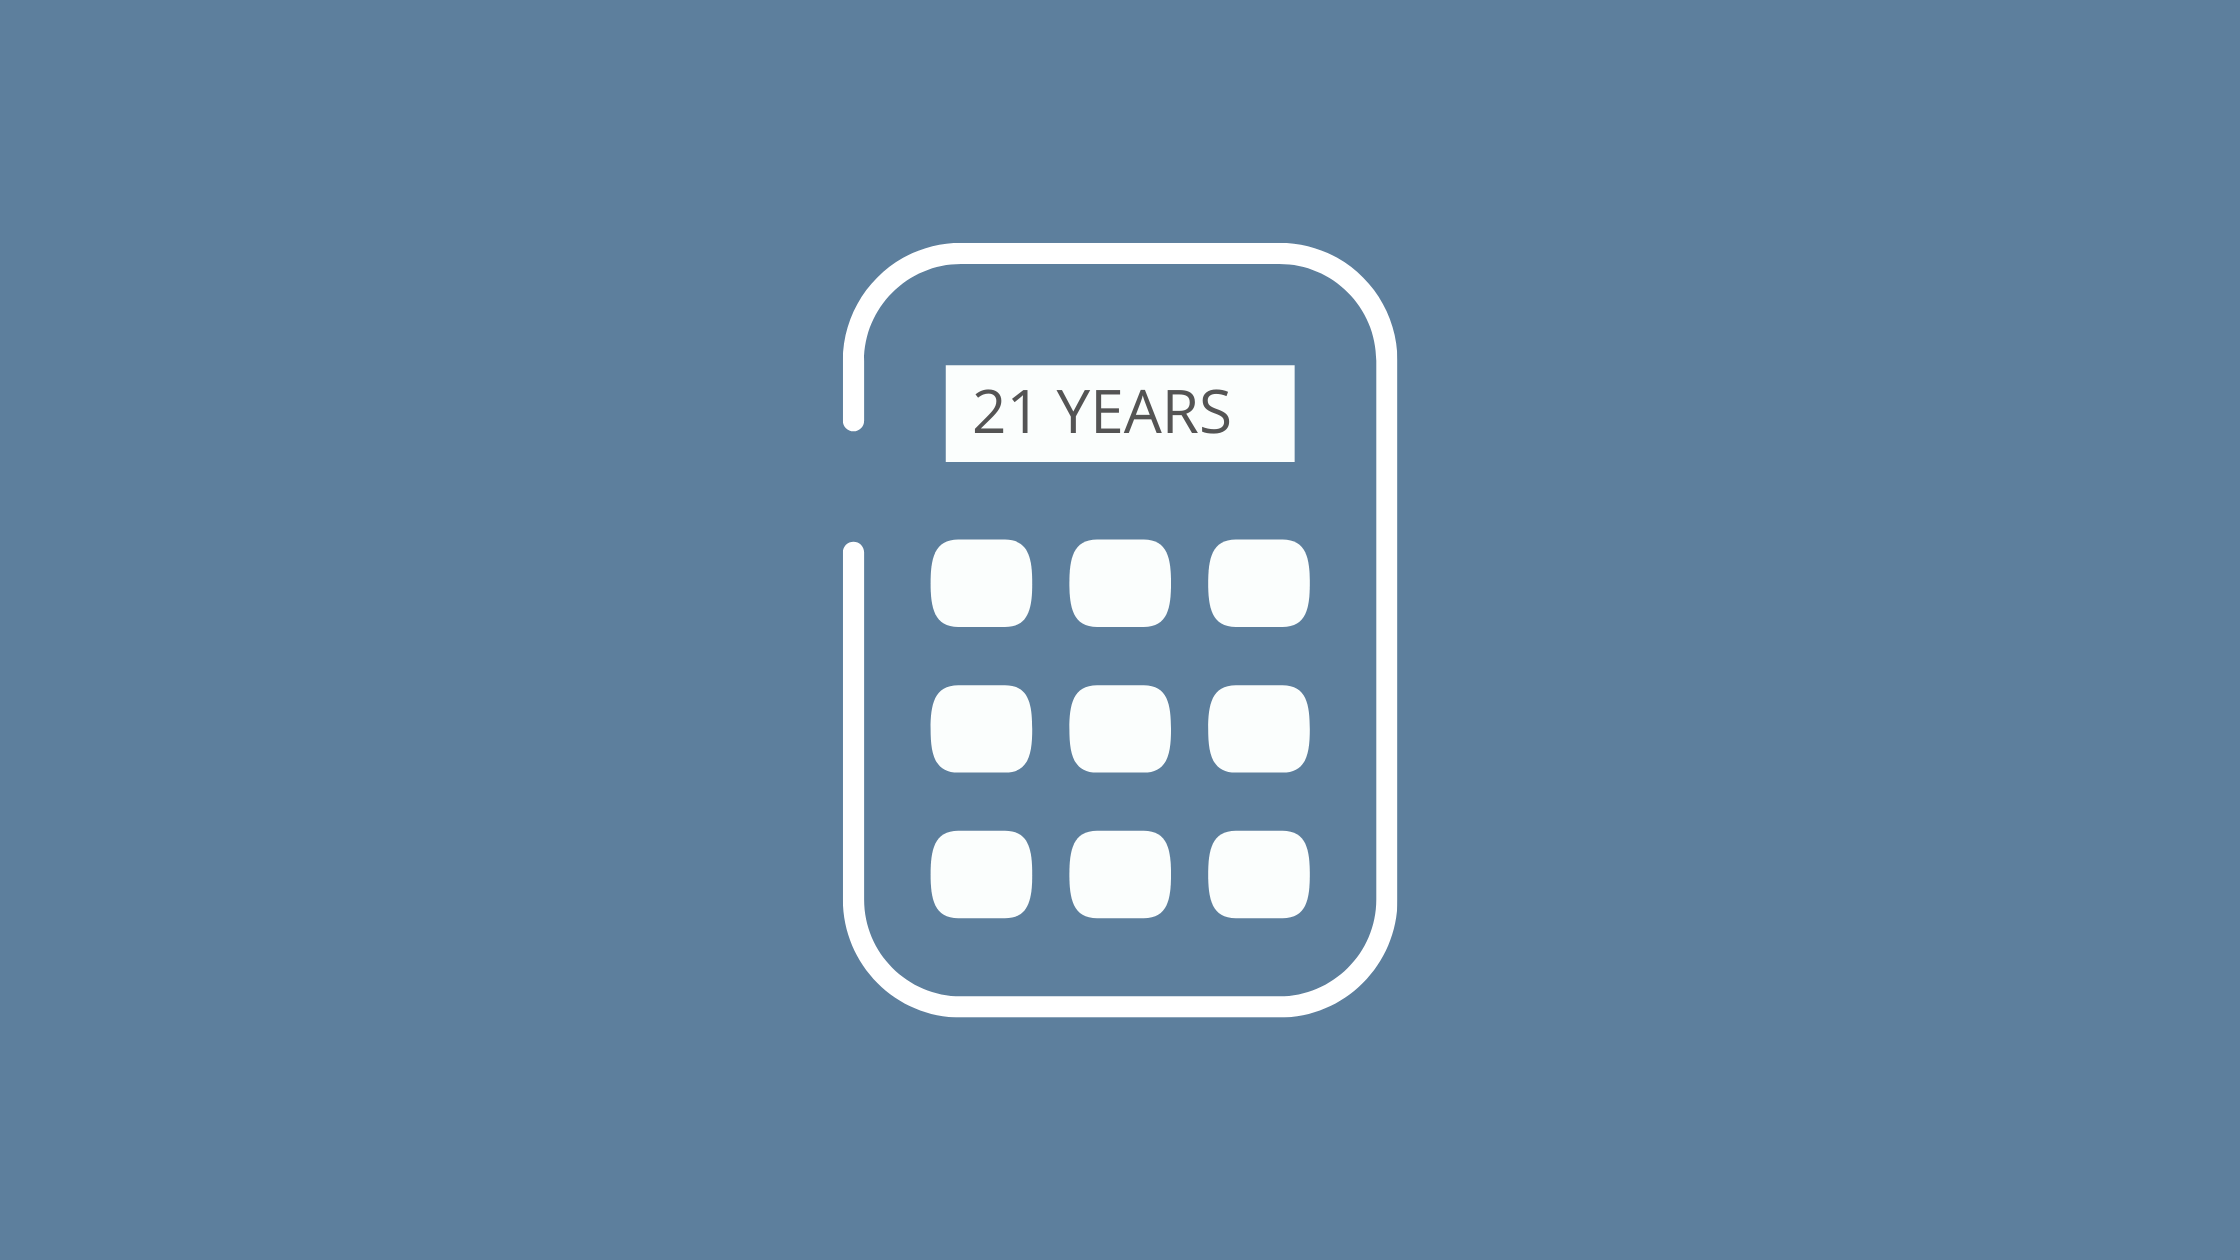 age calculators